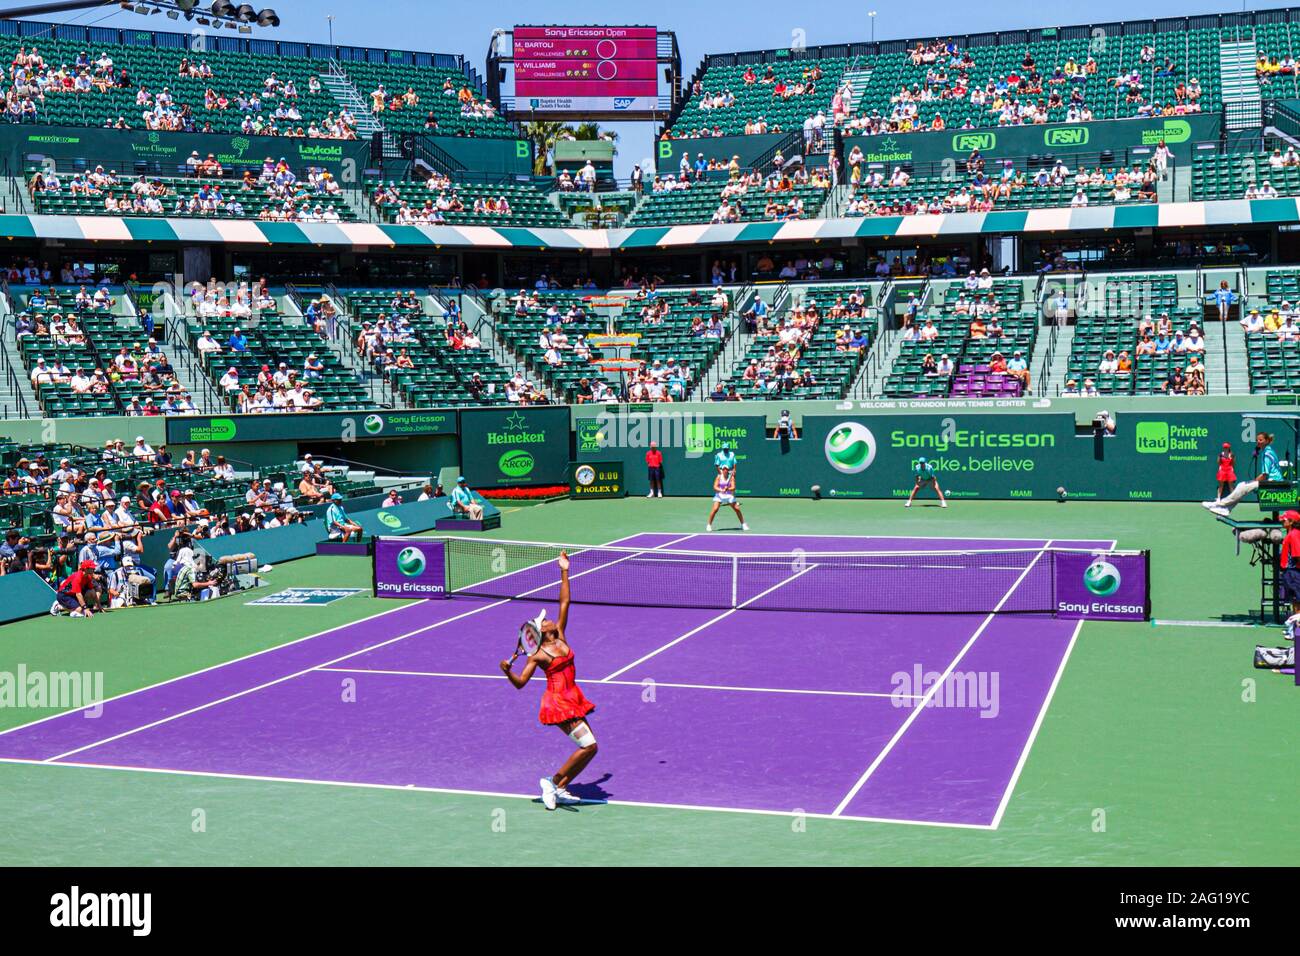 Miami Florida,Key Biscayne,Sony Ericsson Openal tennis tournament,sporting stadium,half full empty,fans,Venus Williams,FL100405026 Stock Photo